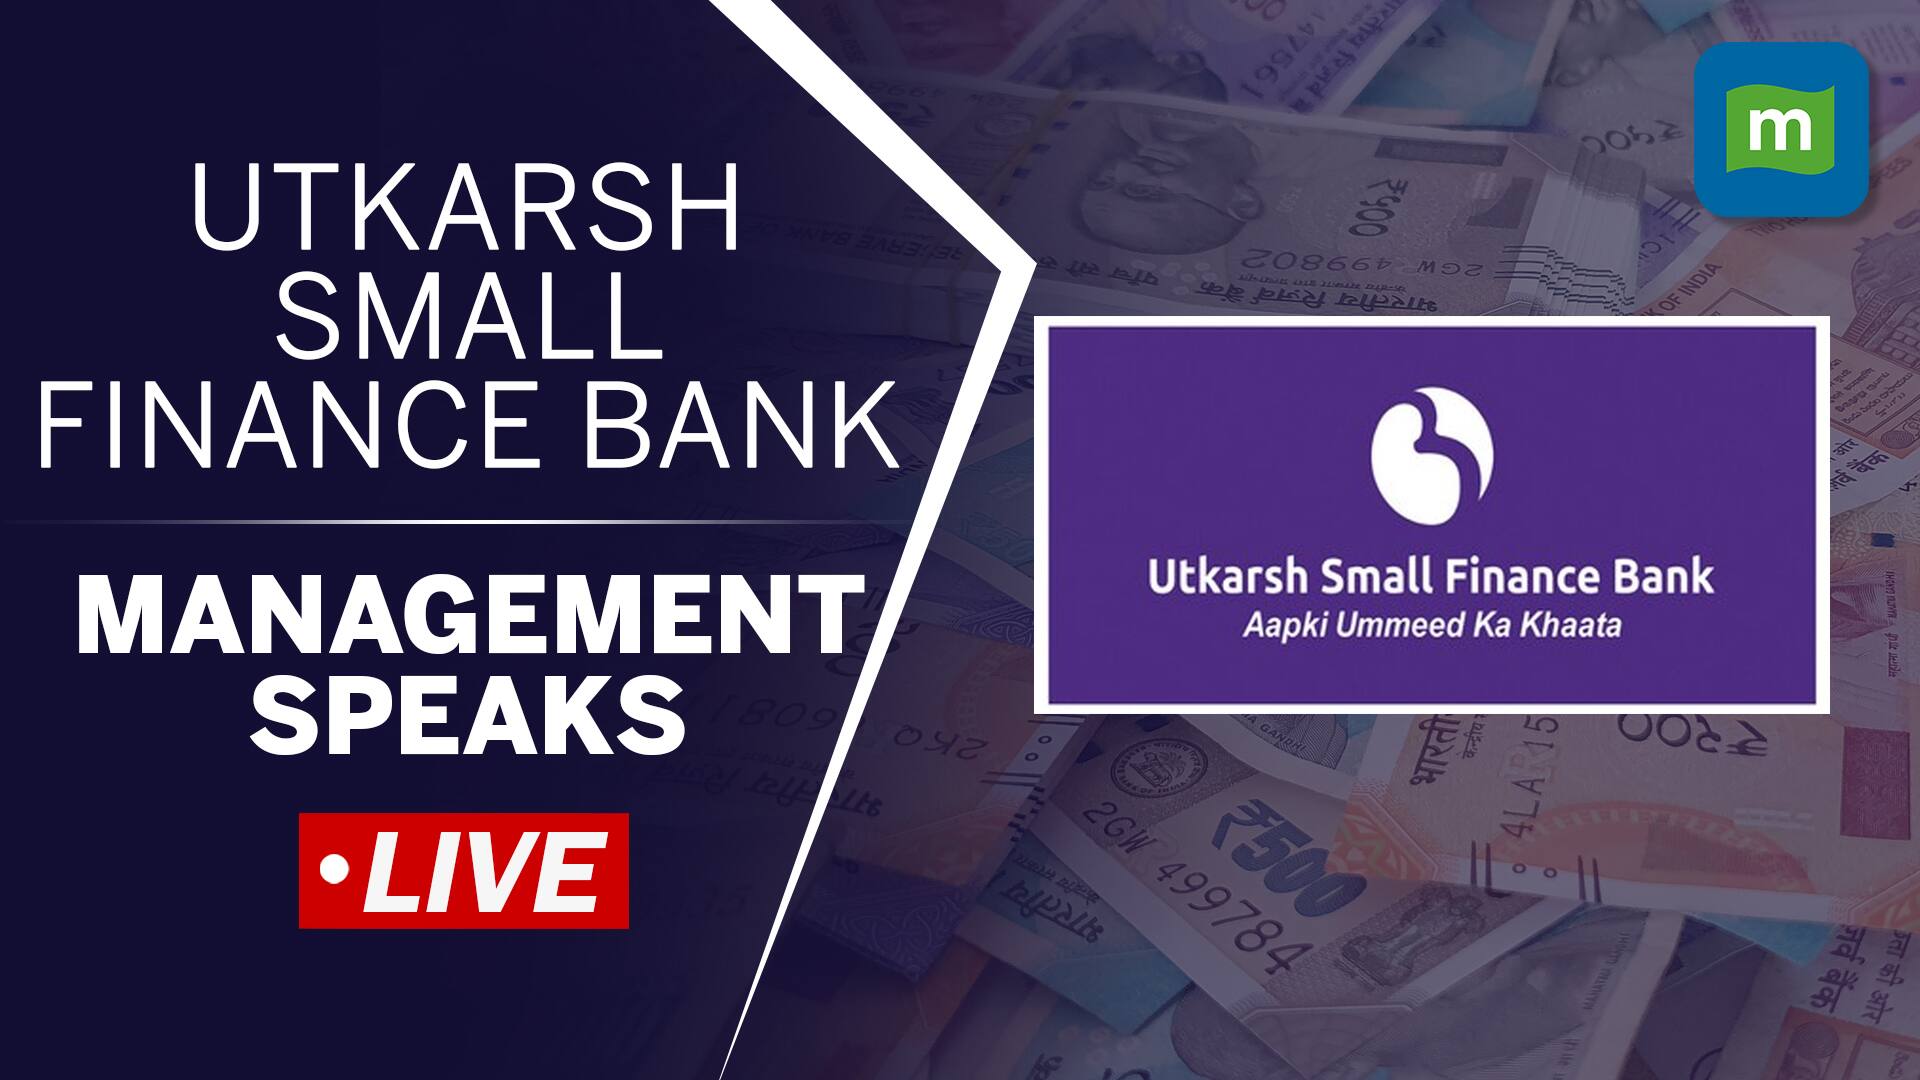 Utkarsh Small Finance Bank IPO Soars, SEE HOW!